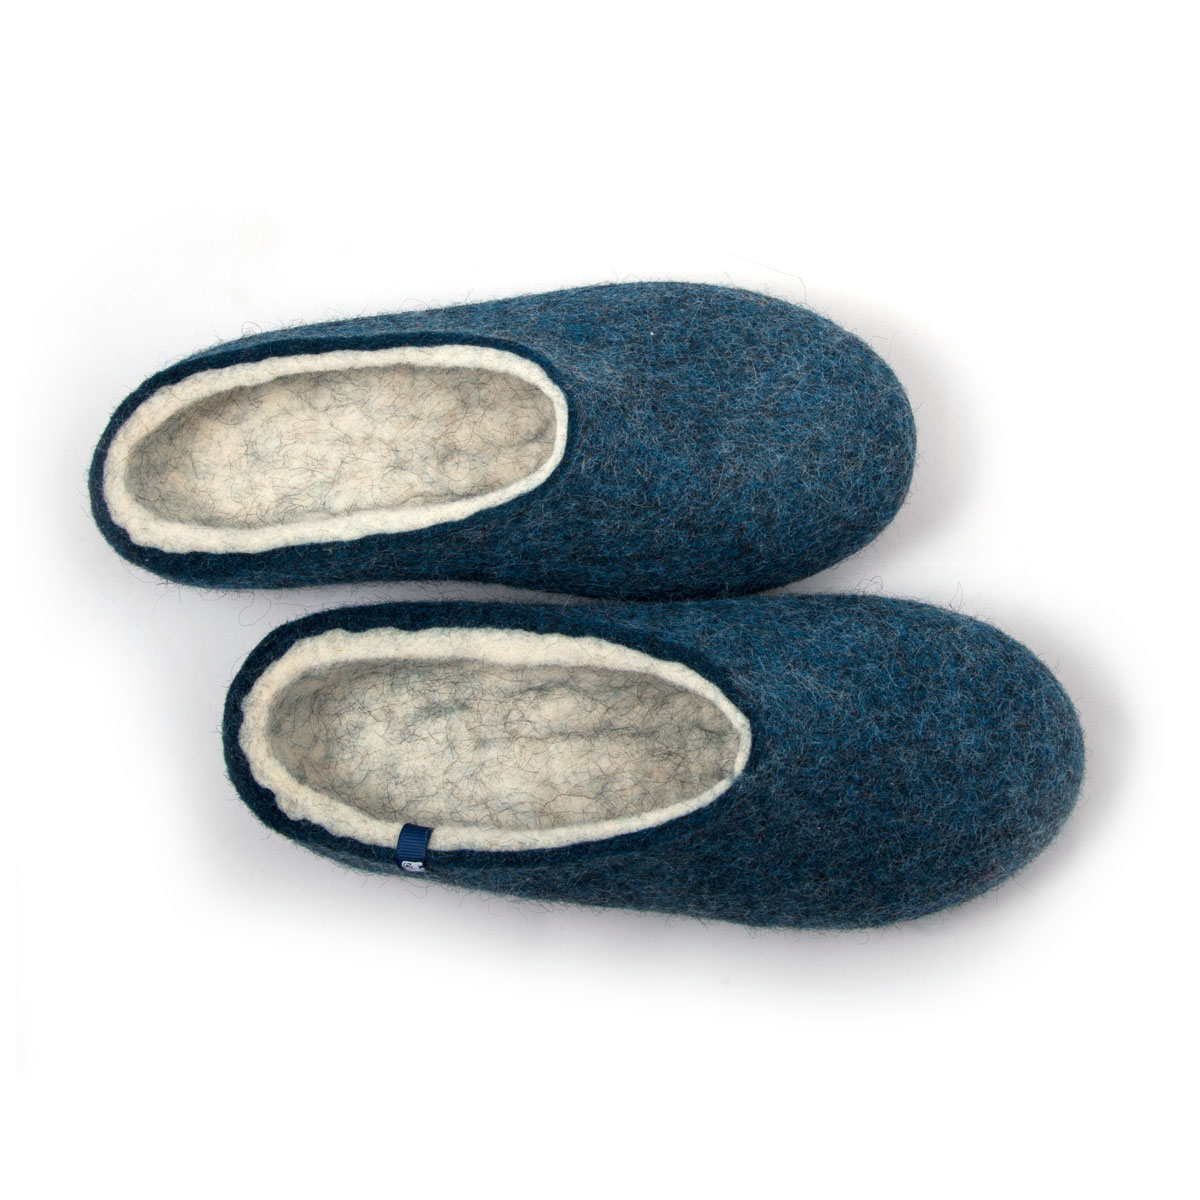 House slippers "COLORI" blue - white Home, Men's Slippers, COLORI